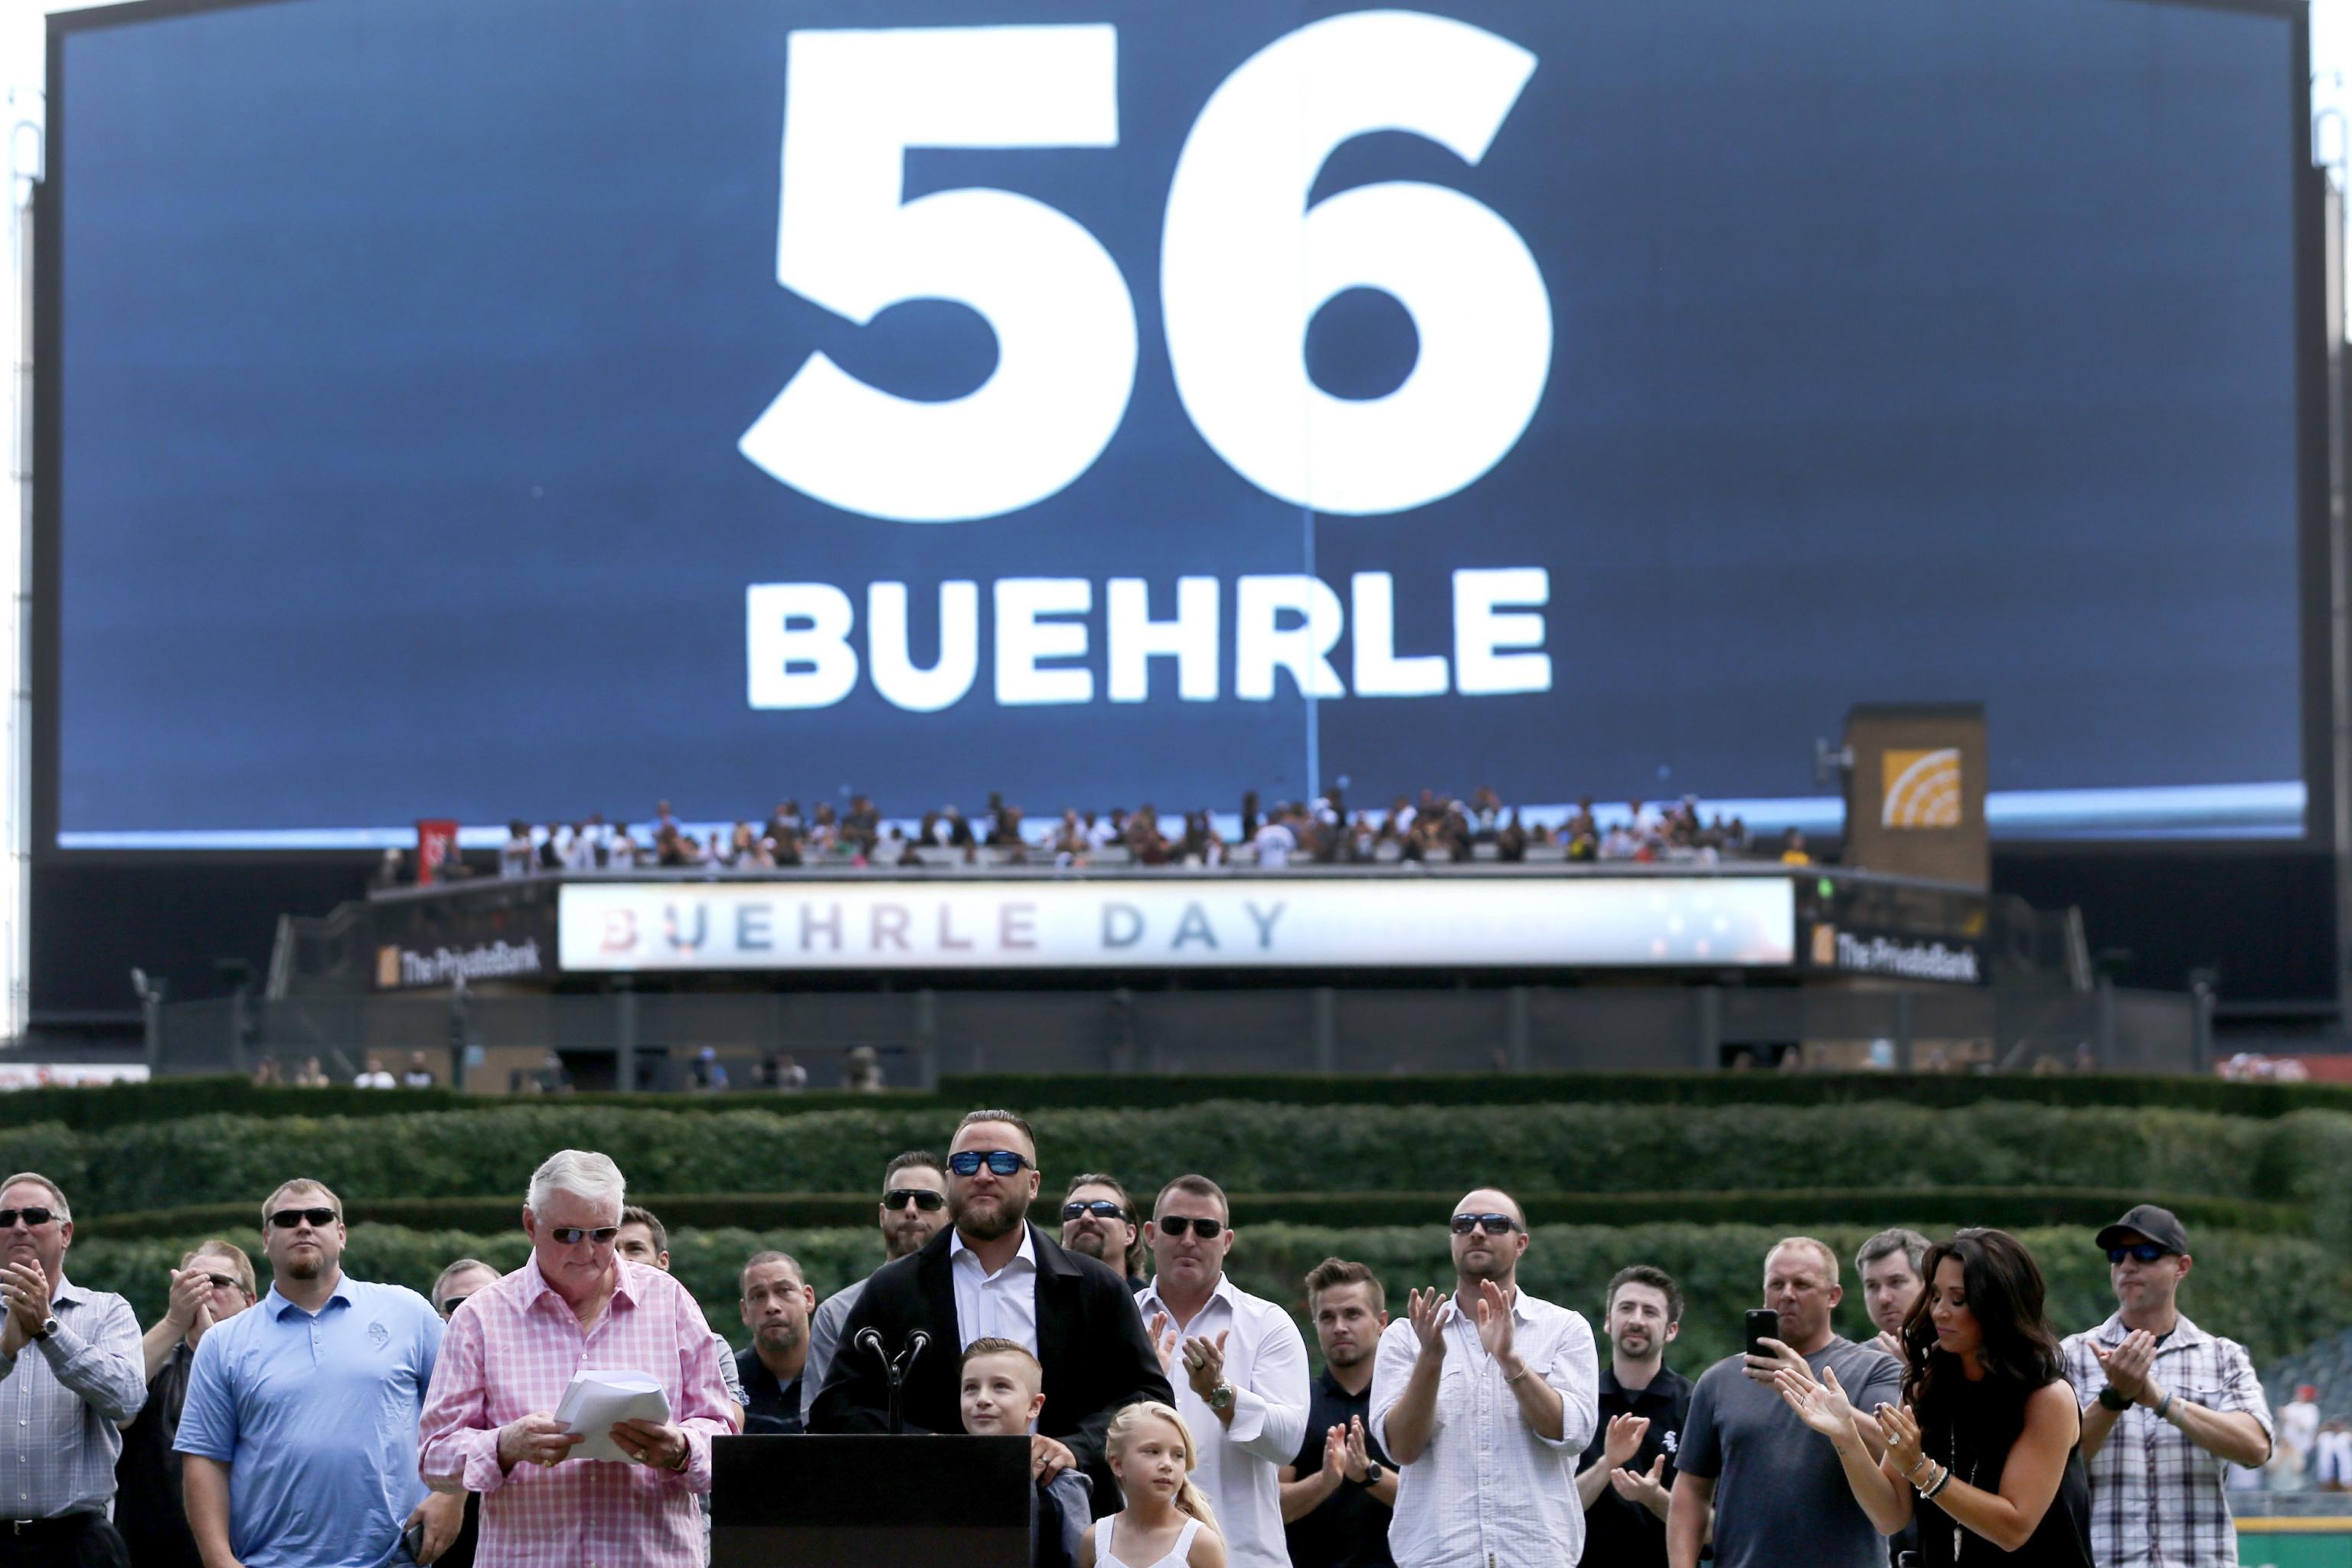 White Sox retire former Blue Jays pitcher Mark Buehrle's No. 56 jersey